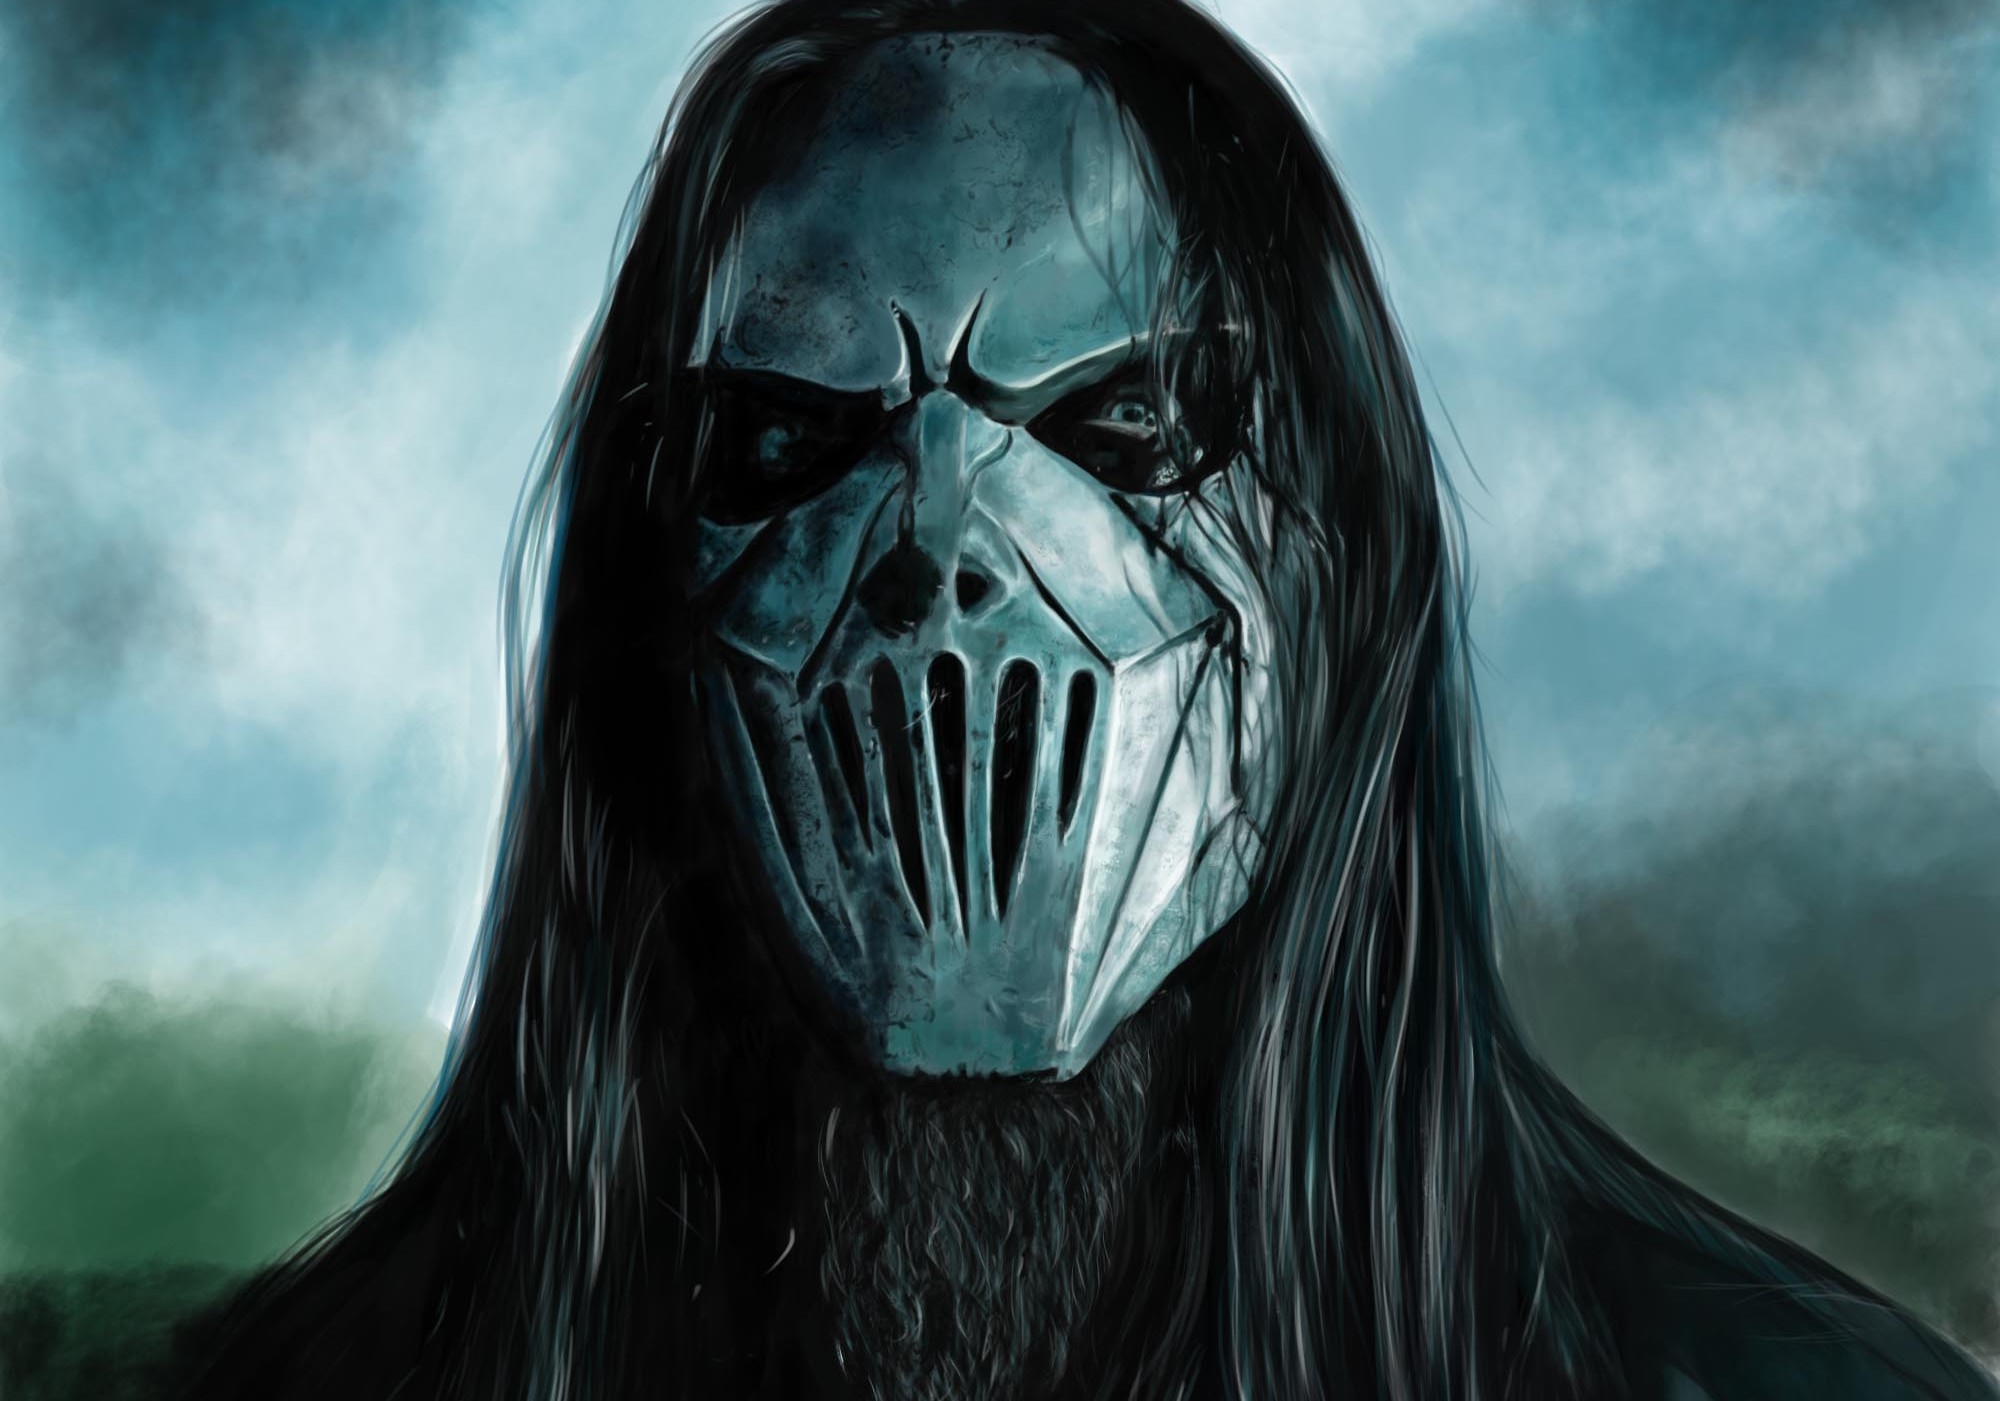 General 2000x1401 drawing Slipknot Mick Thomson shock rock nu metal mask music artwork